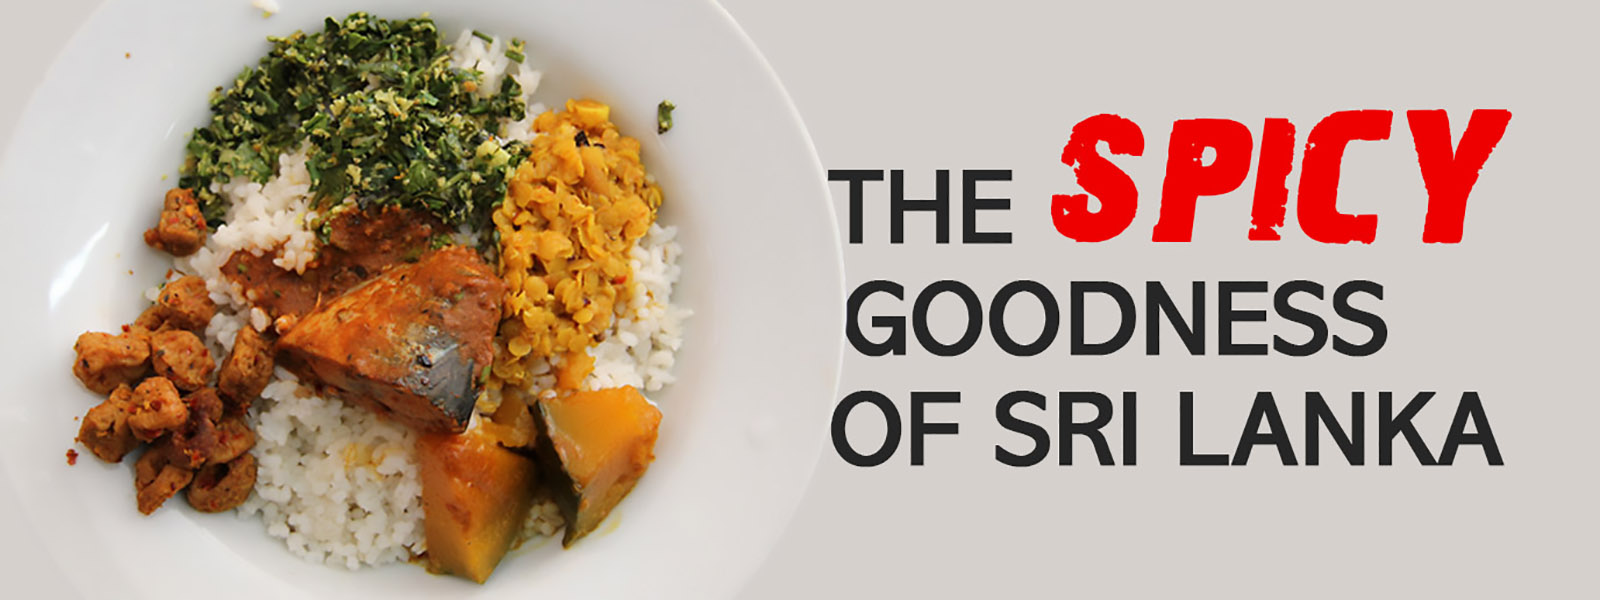 The Spicy Goodness of Sri Lanka!